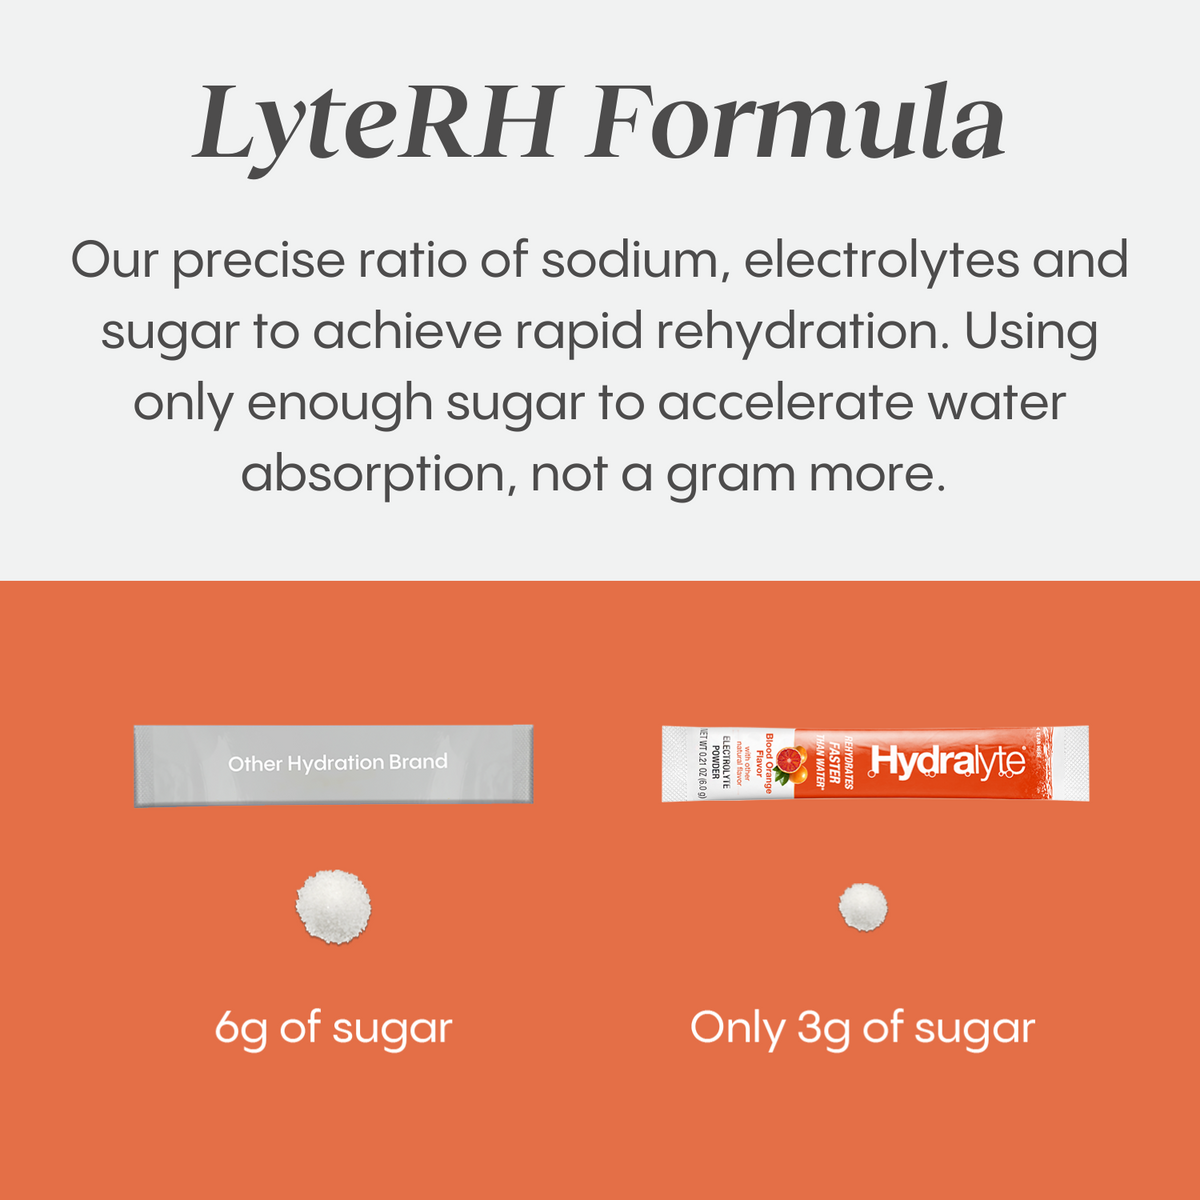 Electrolyte Powder Sticks - Lightly Sparkling (8 oz)